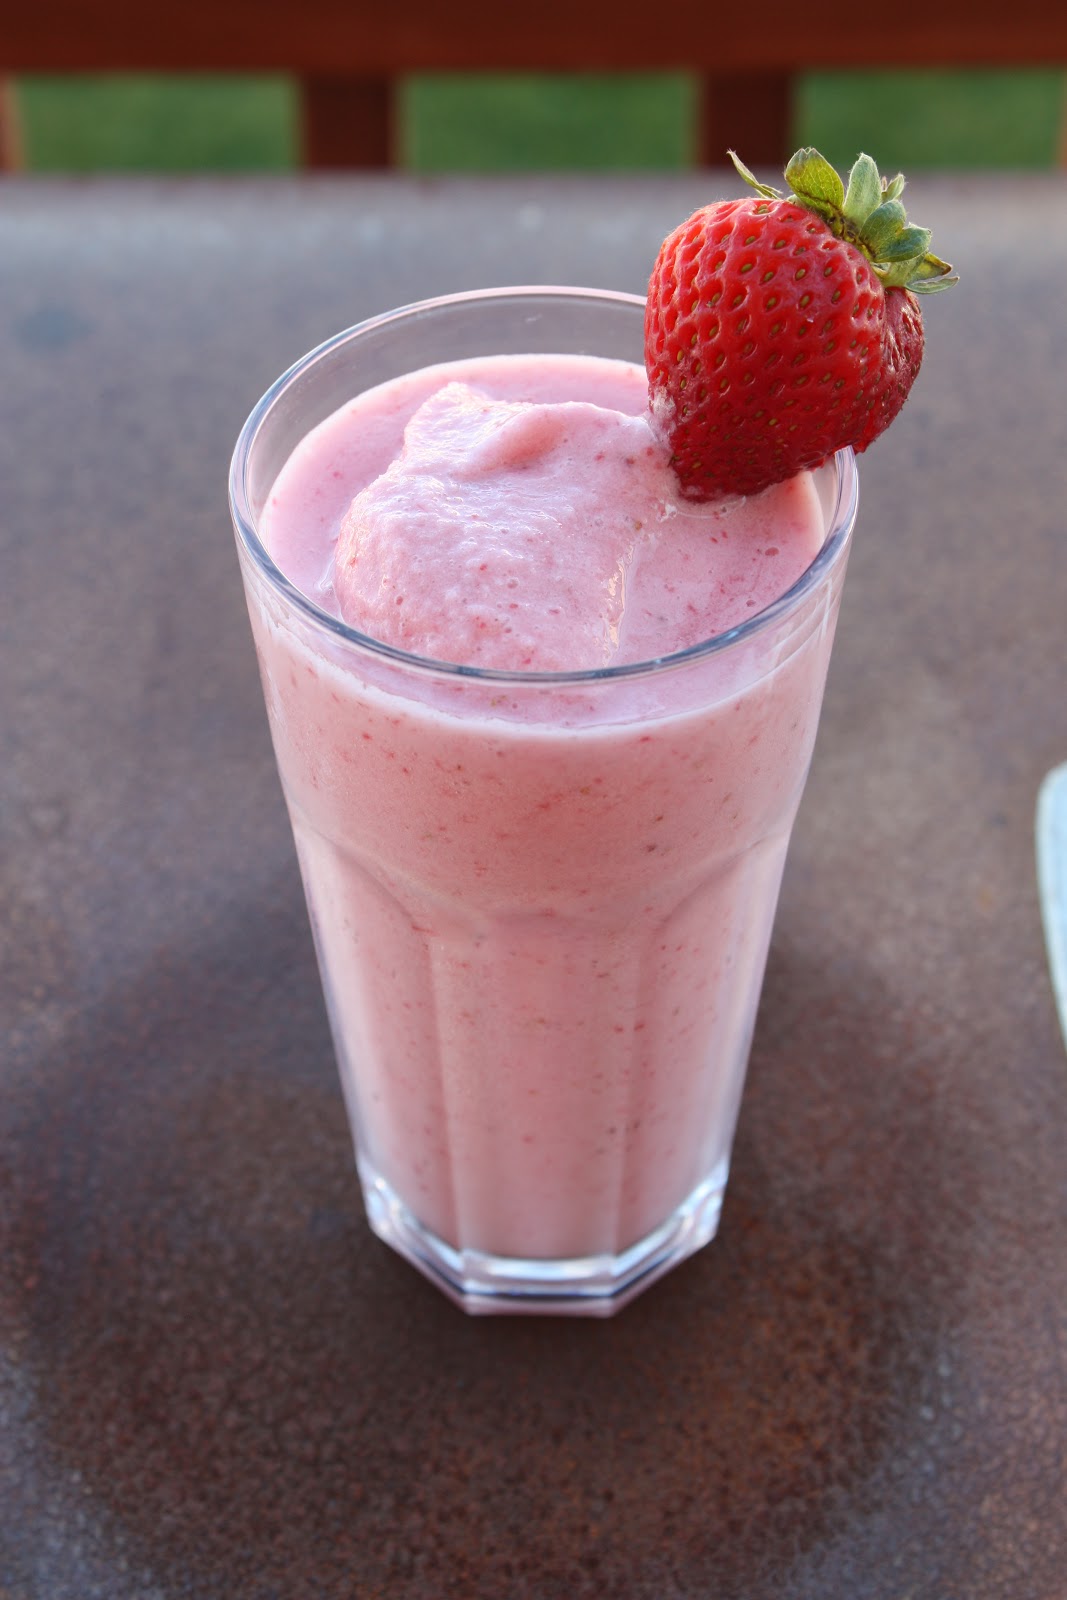 My Favorite Recipes: Ice Cold Strawberry Milkshakes